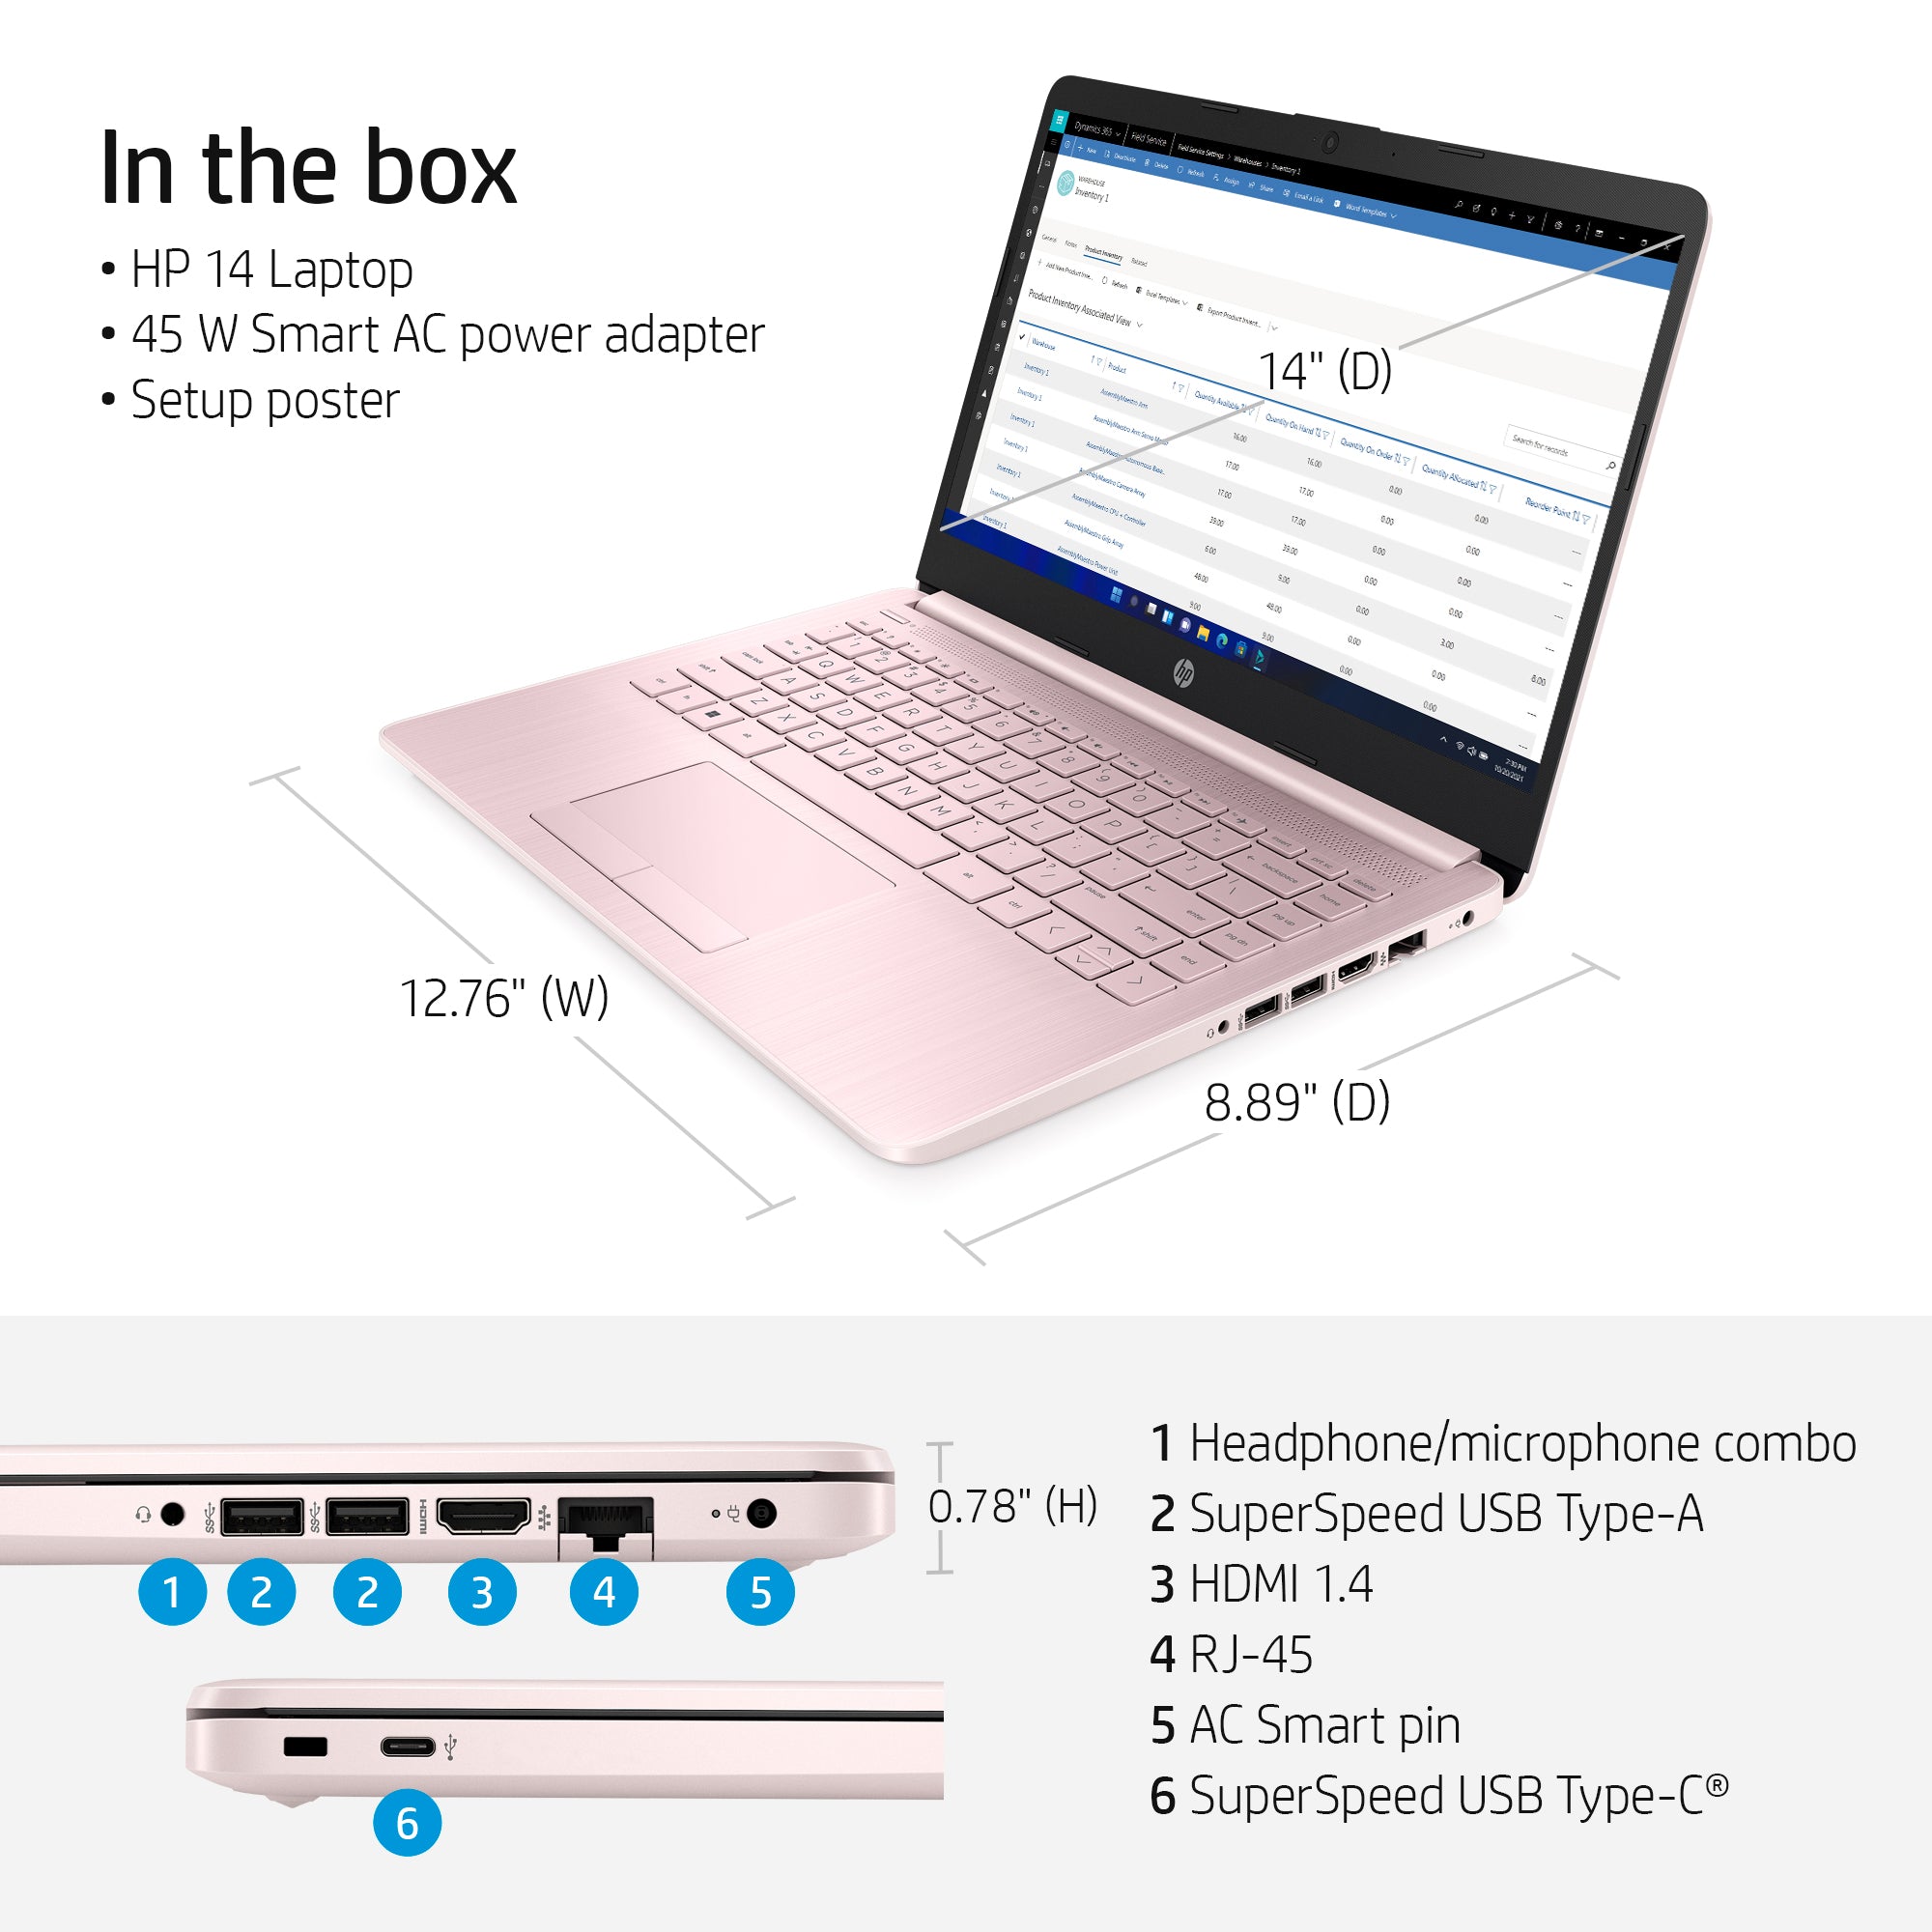 HP Stream 14" Laptop, Intel Celeron N4020 Processor, 4GB RAM, 64GB eMMC, Pink, Windows 11 (S mode) with Office 365 1-yr, 14-cf2112wm | MTTS1